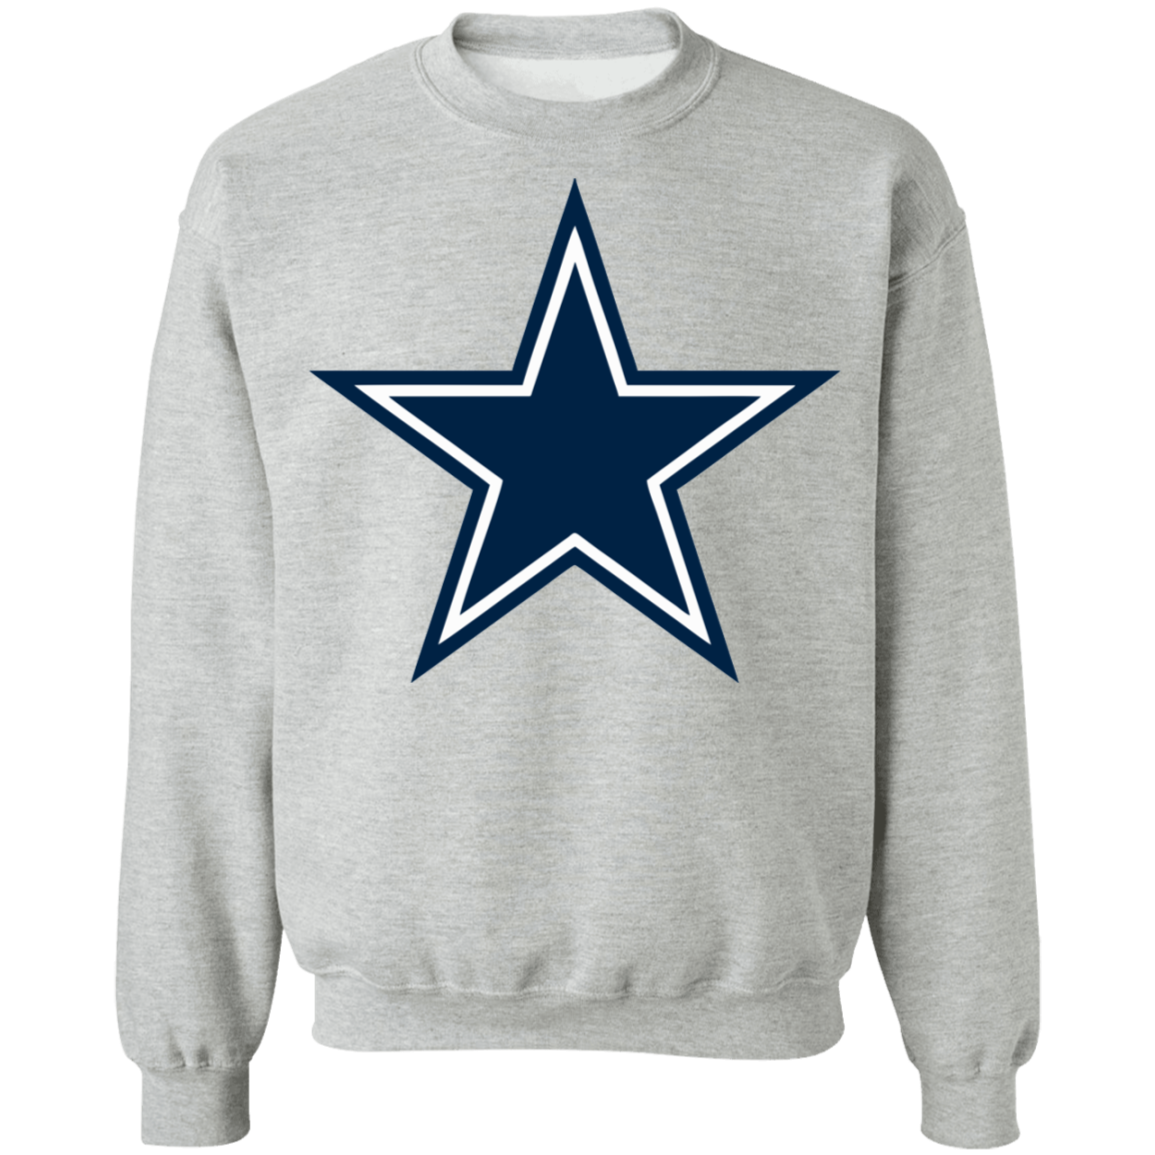 Dallas Cowboys M 19 Arben Crew Neck Sweater Gray - The Locker Room of Downey